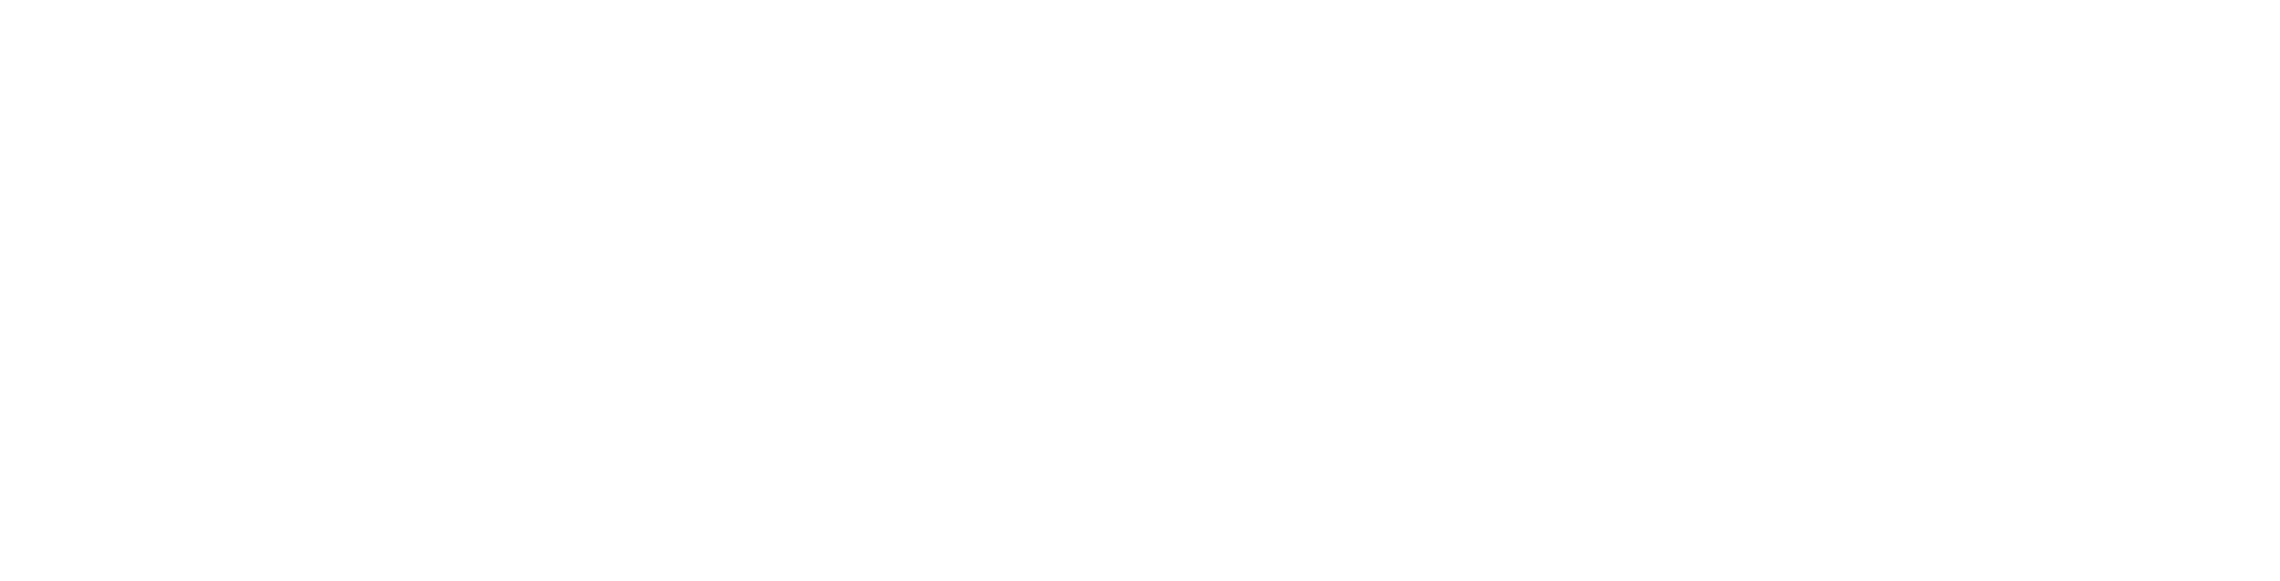 RYAN STONES Logo